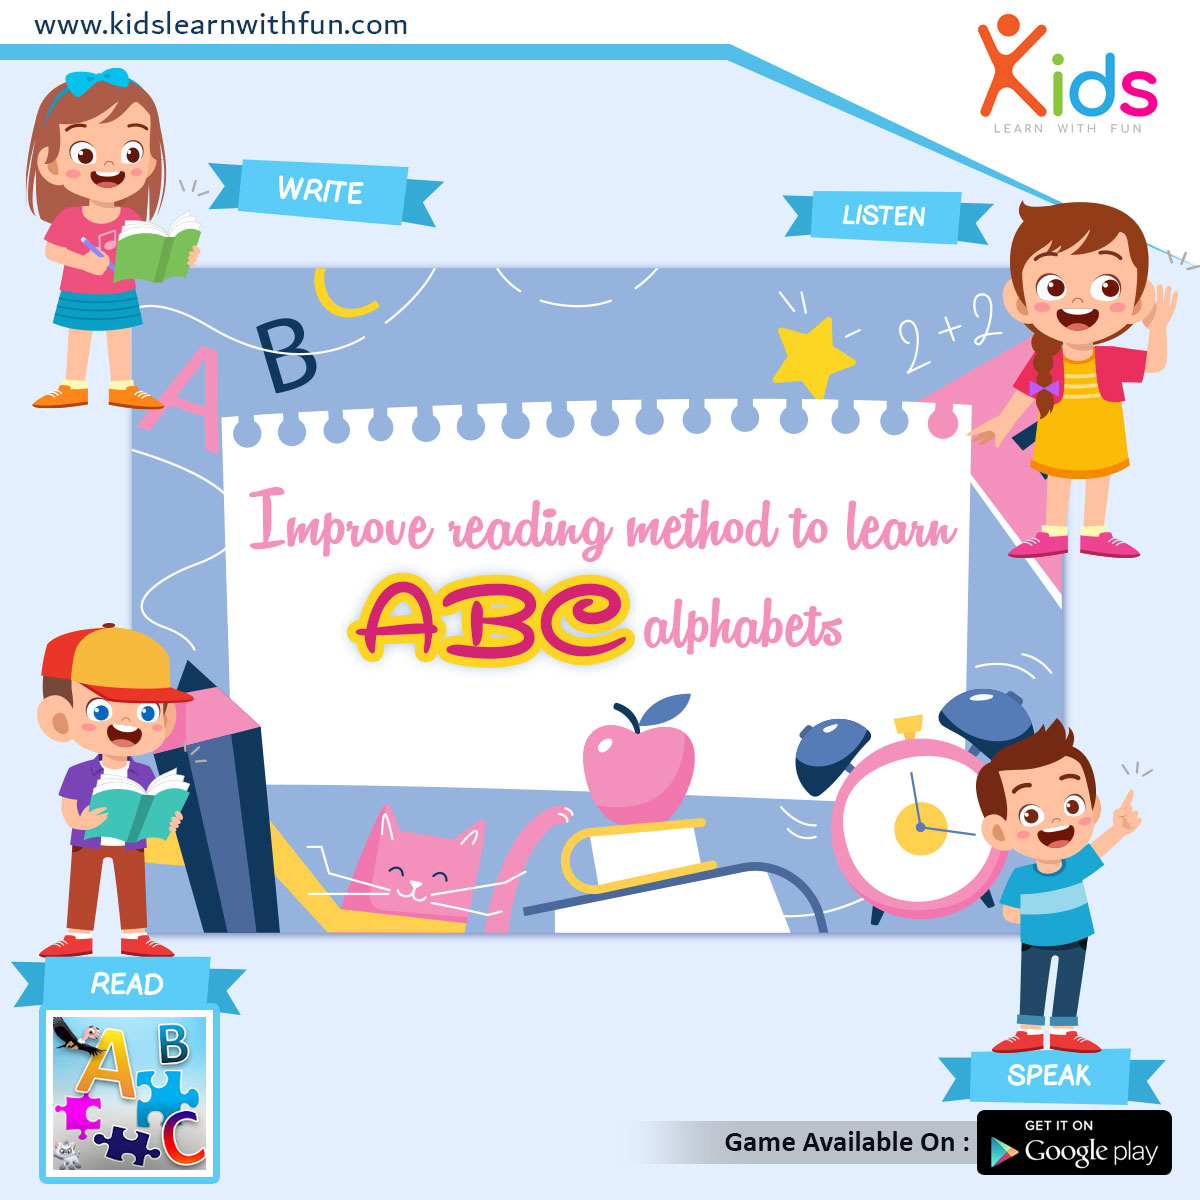 Improve the reading method to learn ABC alphabets: play.google.com/store/apps/det…
#ABC #alphabets #JigsawPuzzle #Puzzlegame #alphabetsgame #kidsgames #kidsgame #learn #learning #kidslearning #kidslearnwithfun #motorskill #entertainment #education